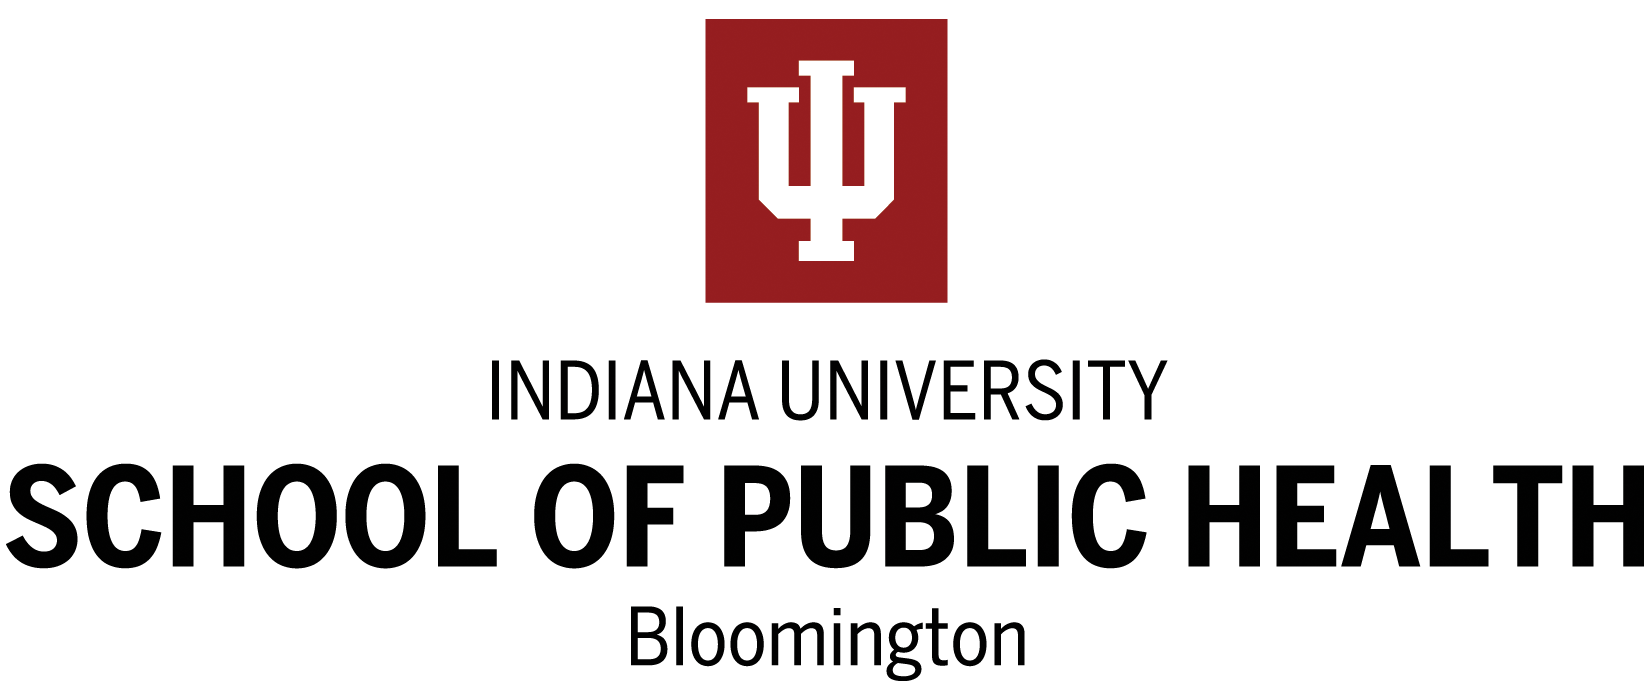 IU Logo - Sponsorship Assets: Marketing and Communications: About Us: School